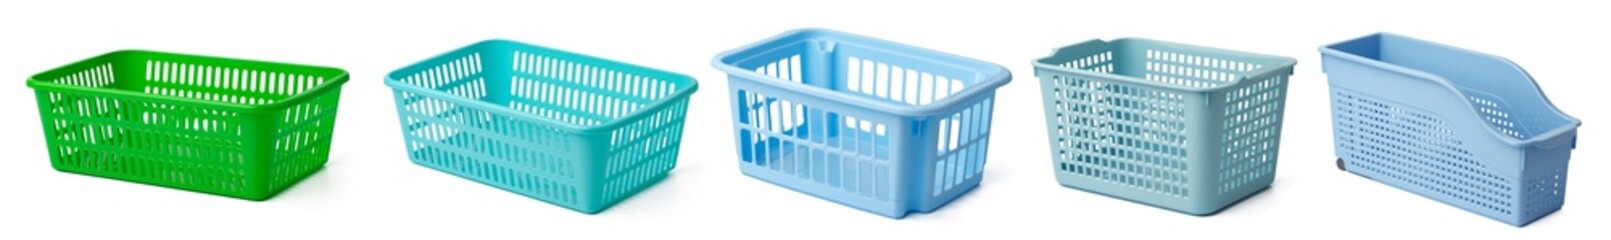 Set of plastic shopping baskets on white background.